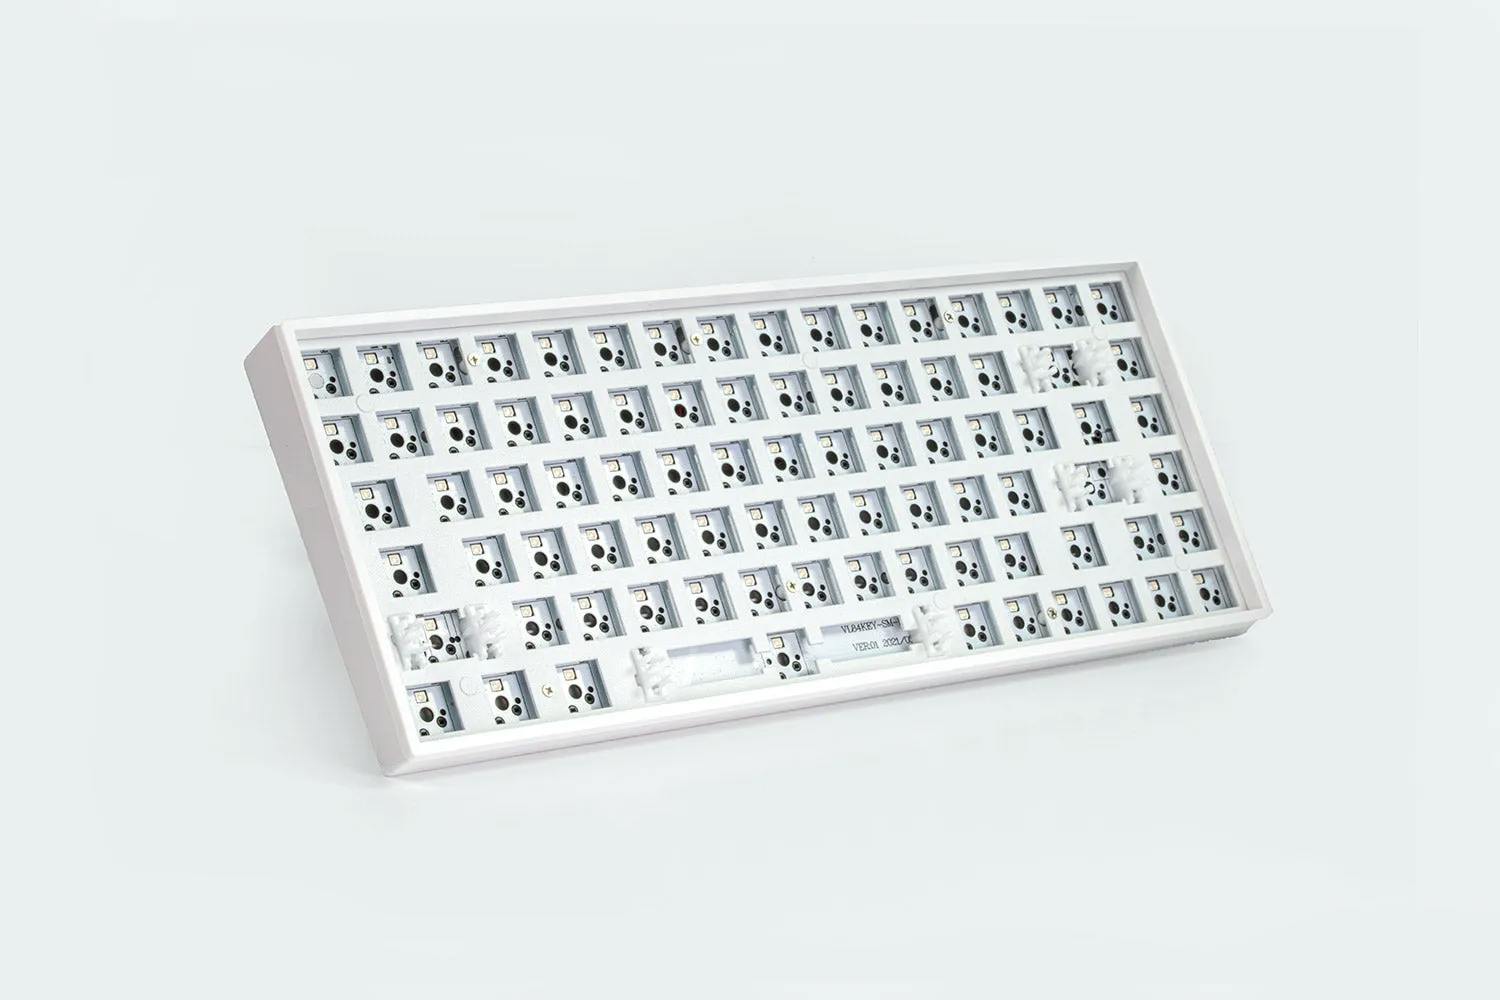 Image for Kono 84 Keyboard